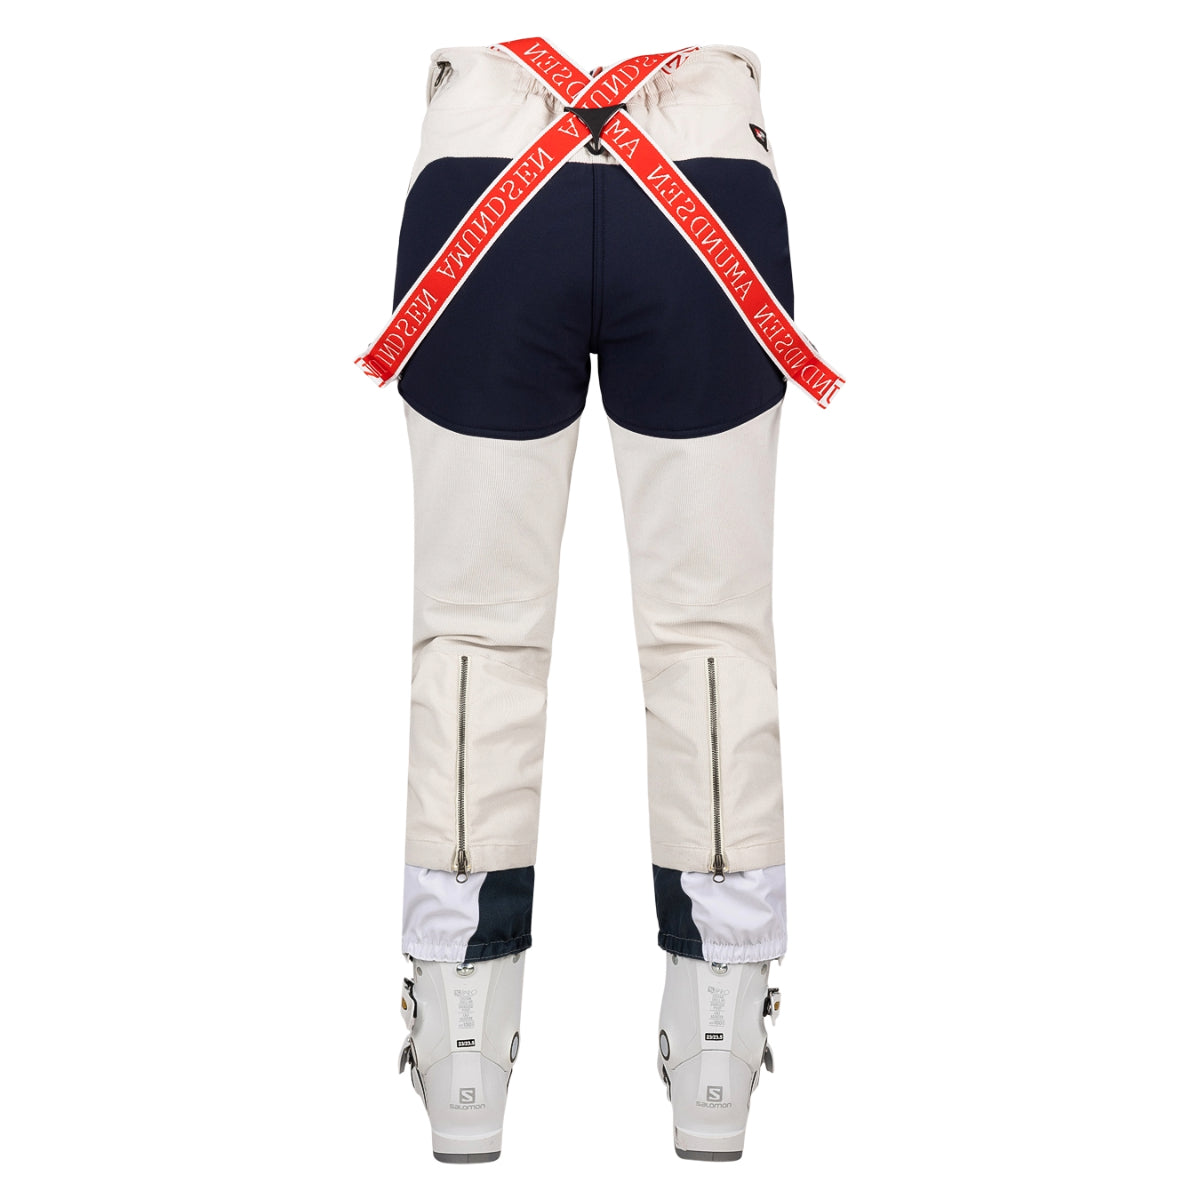 Amundsen Sports - Women's Concord Ski Pants - Natural